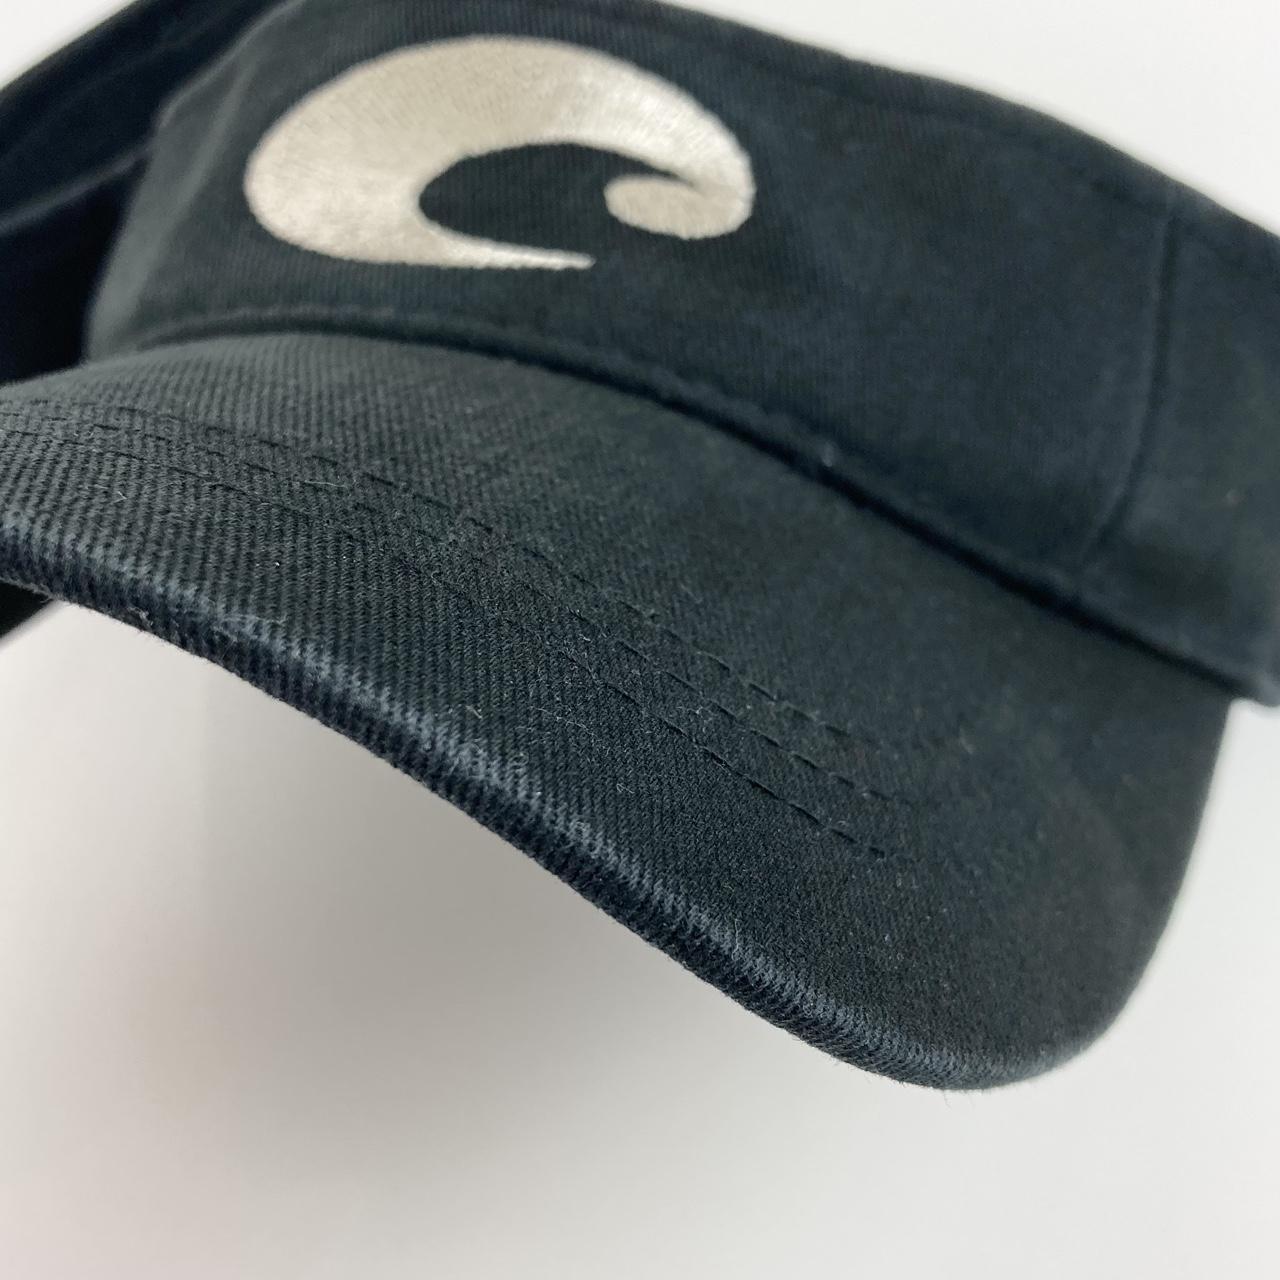 Costa Del Mar Unisex Black Visor Hat Adjustable